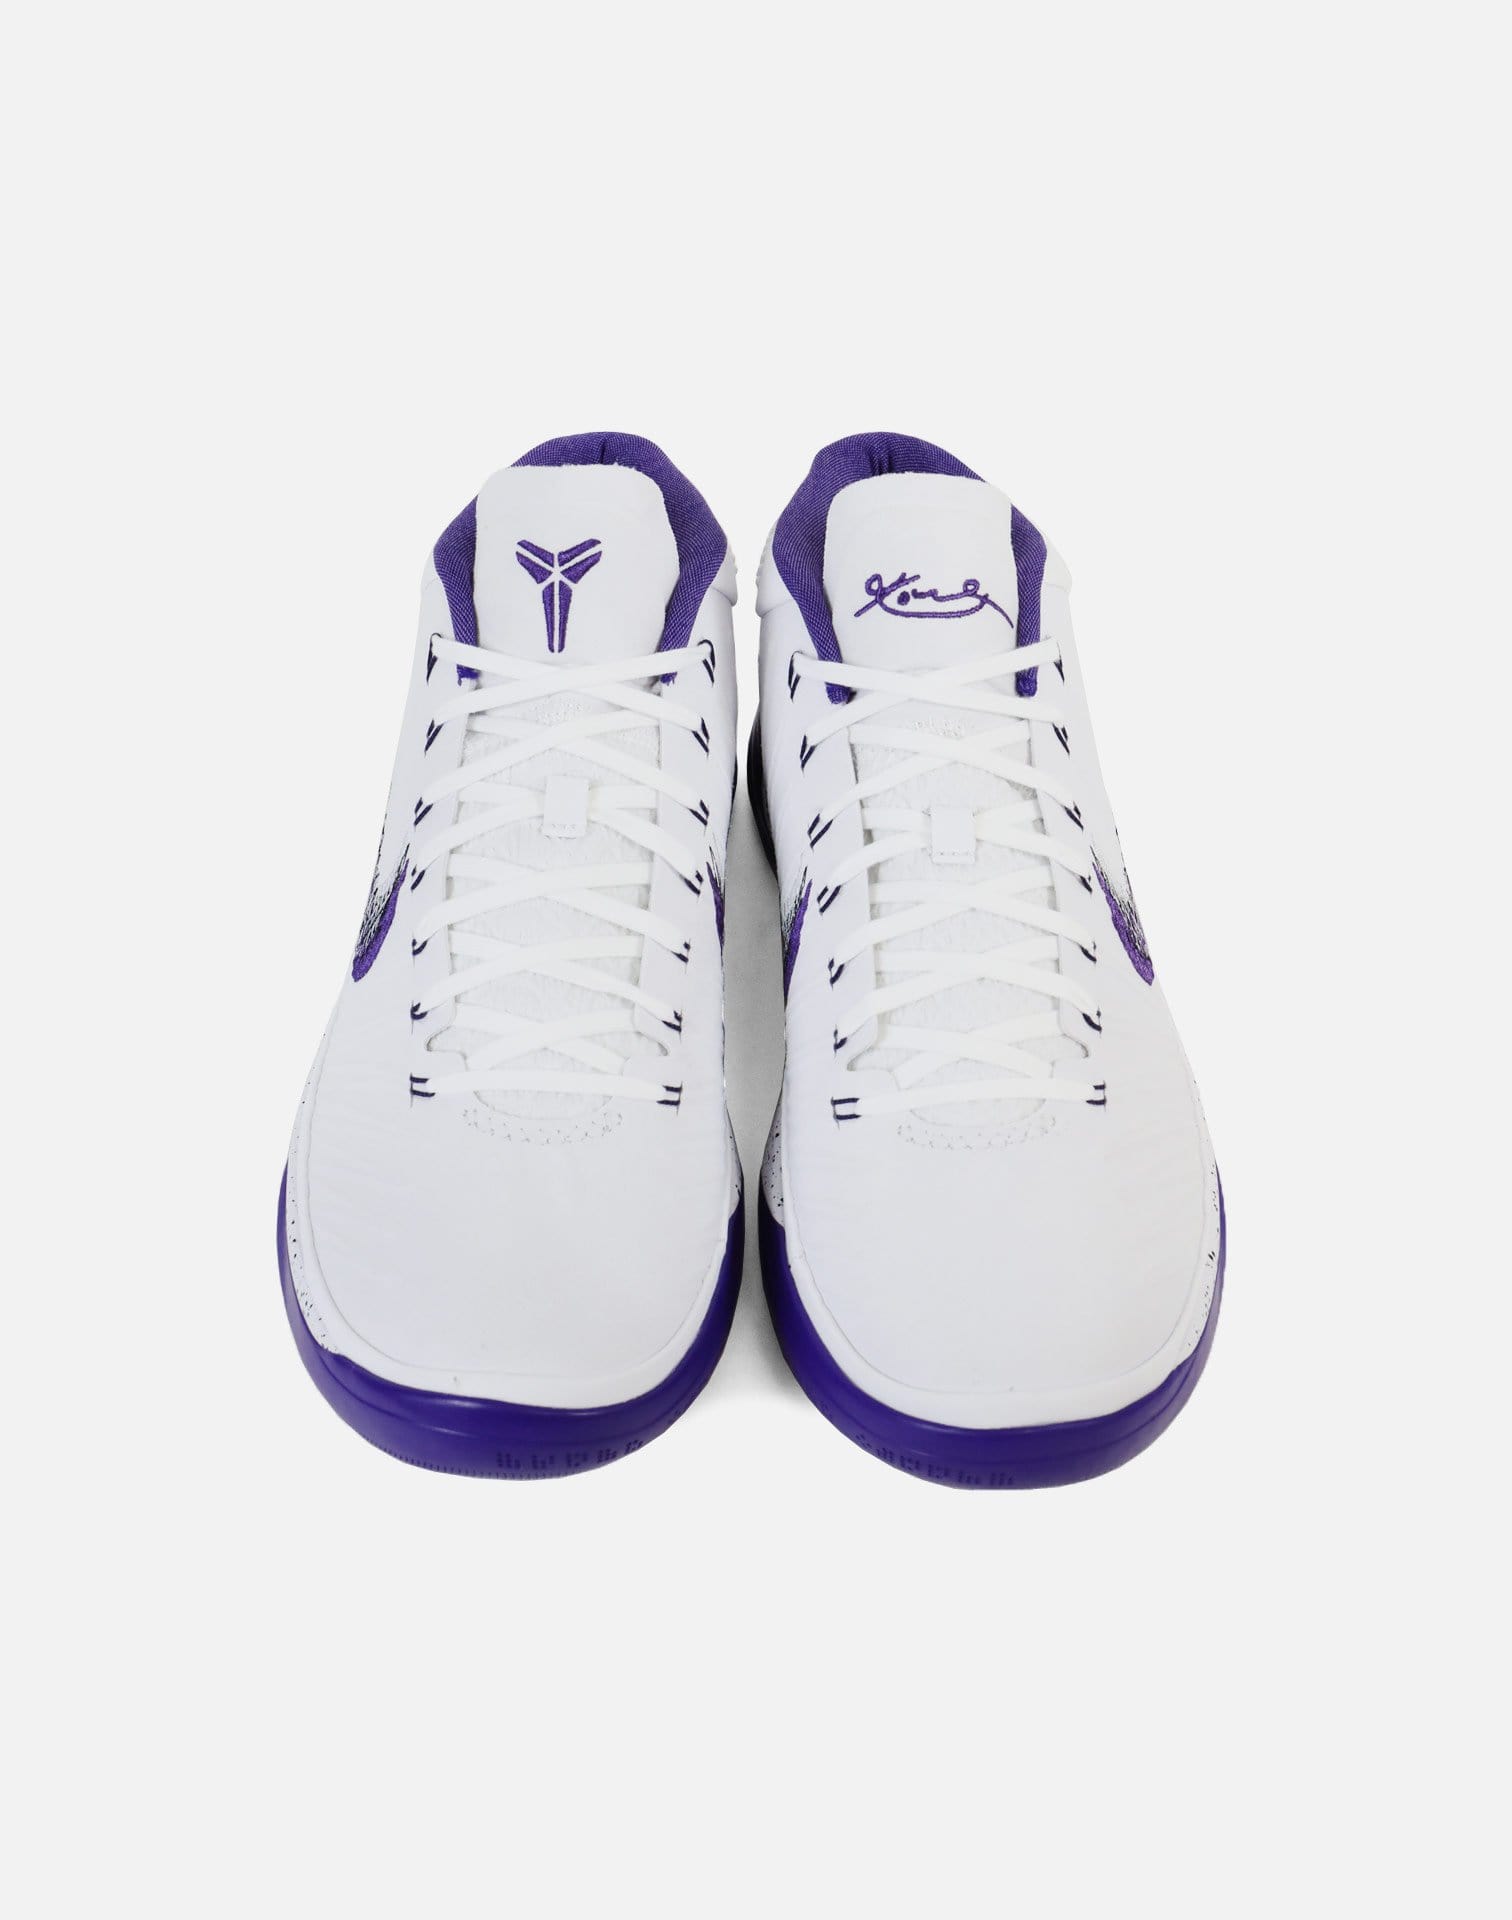 Nike Kobe A.D. (White/Court Purple-Black)